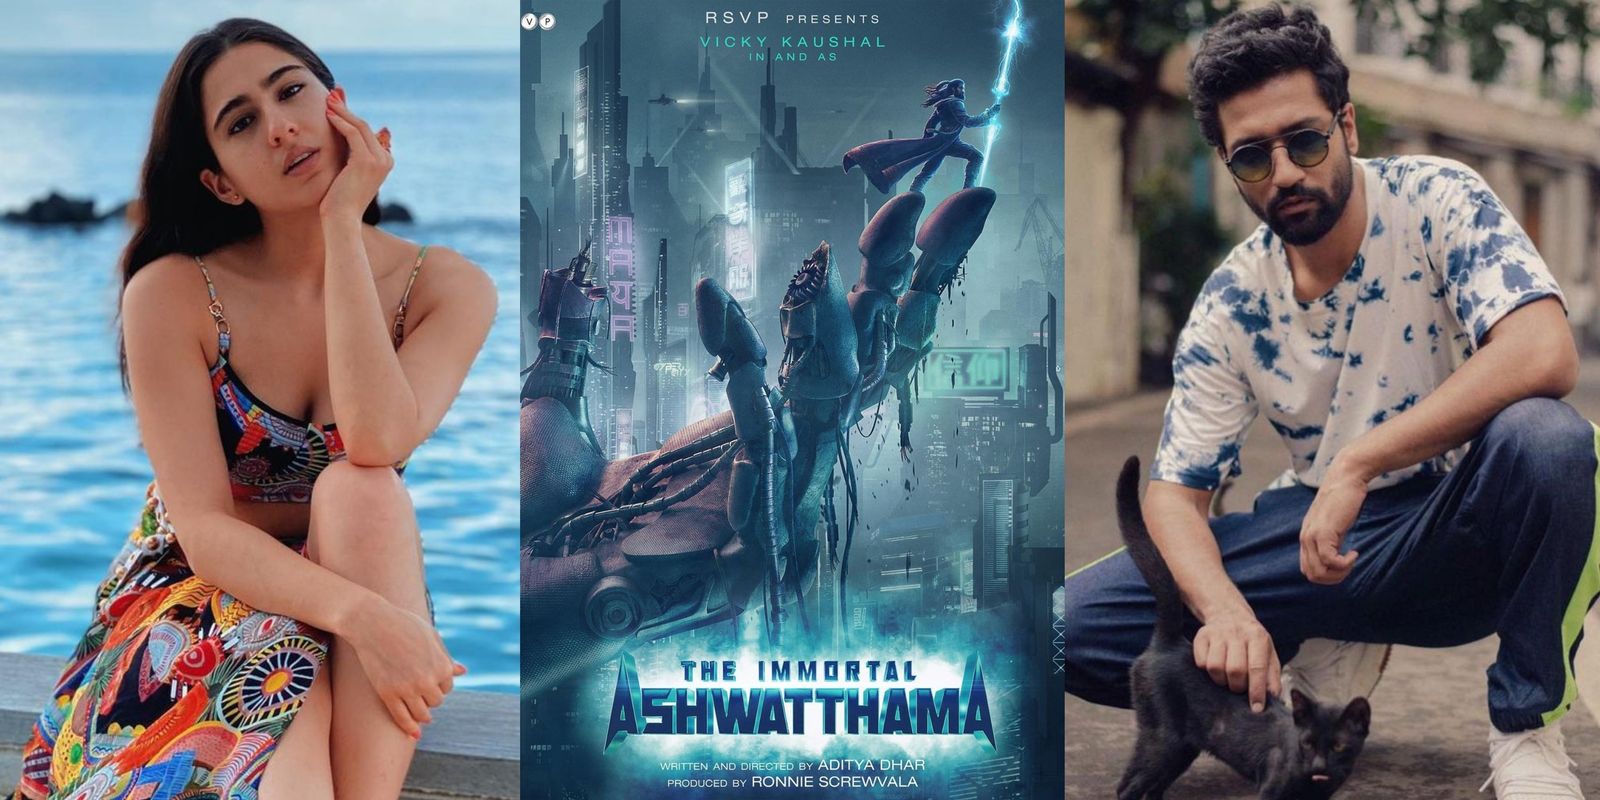 The Immortal Ashwatthama: Sara Ali Khan & Vicky Kaushal To Begin Shooting The Superhero Film In June